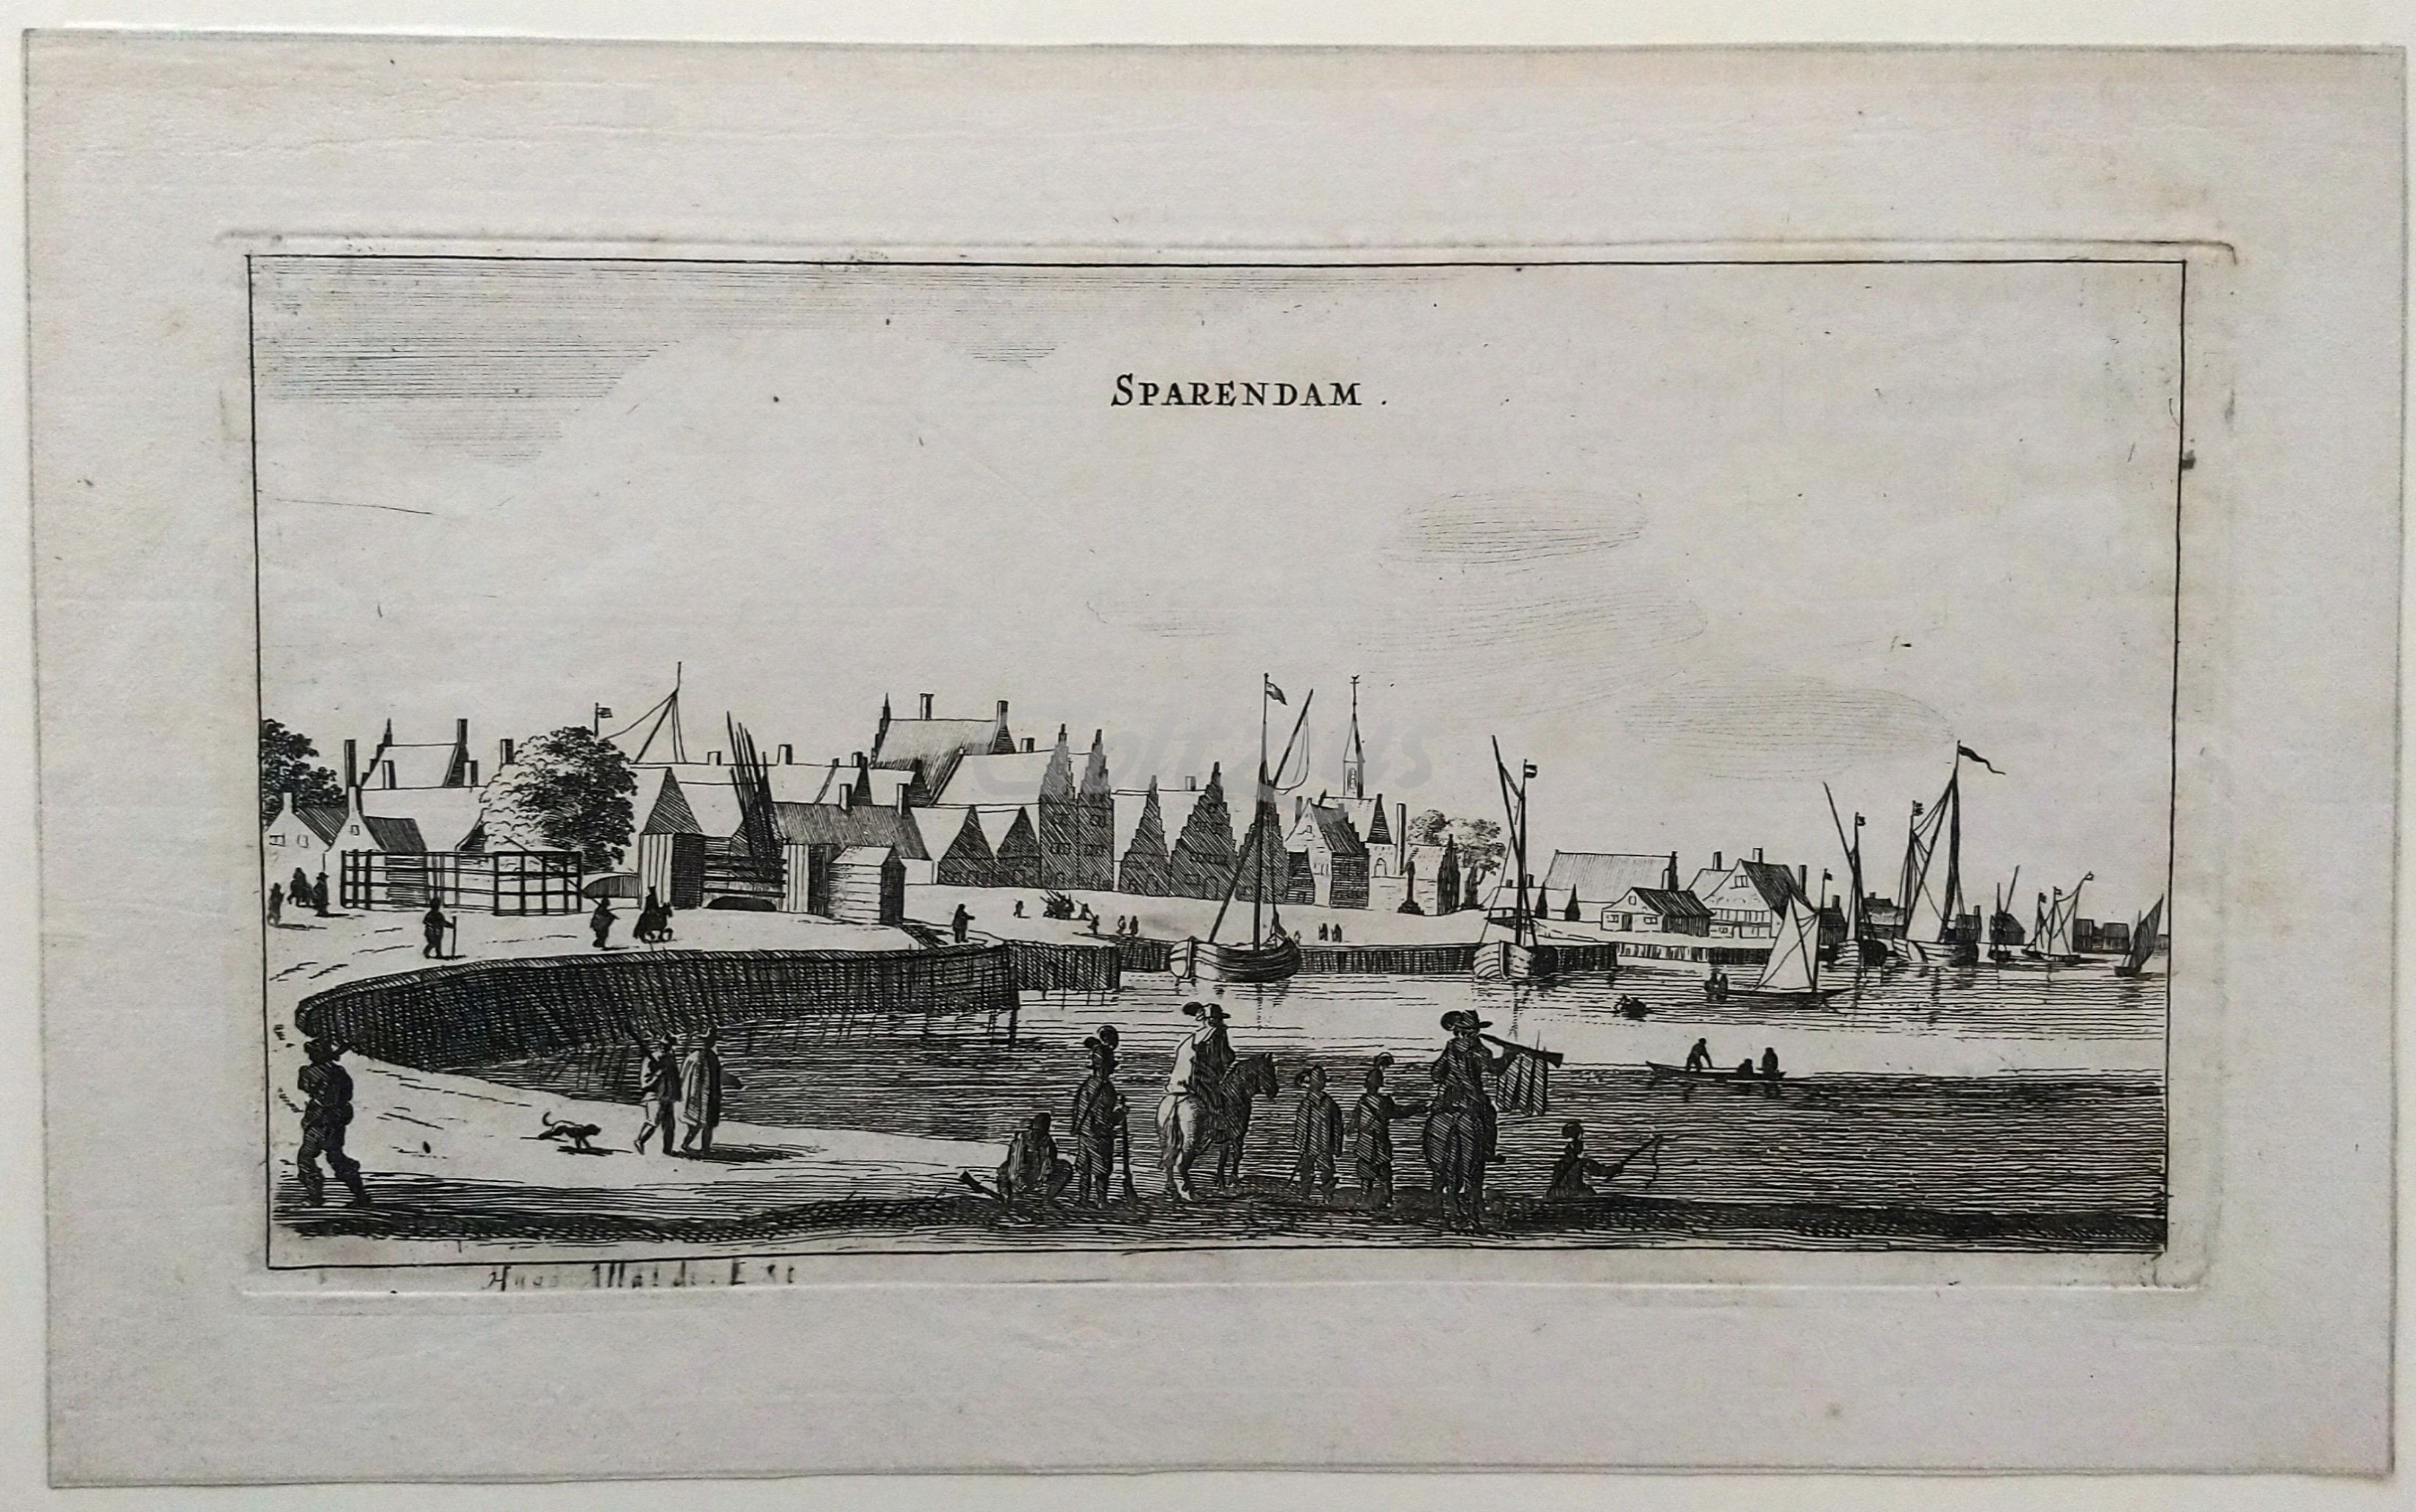 ROGHMAN, ROELANT (1627-1692), Sparendam